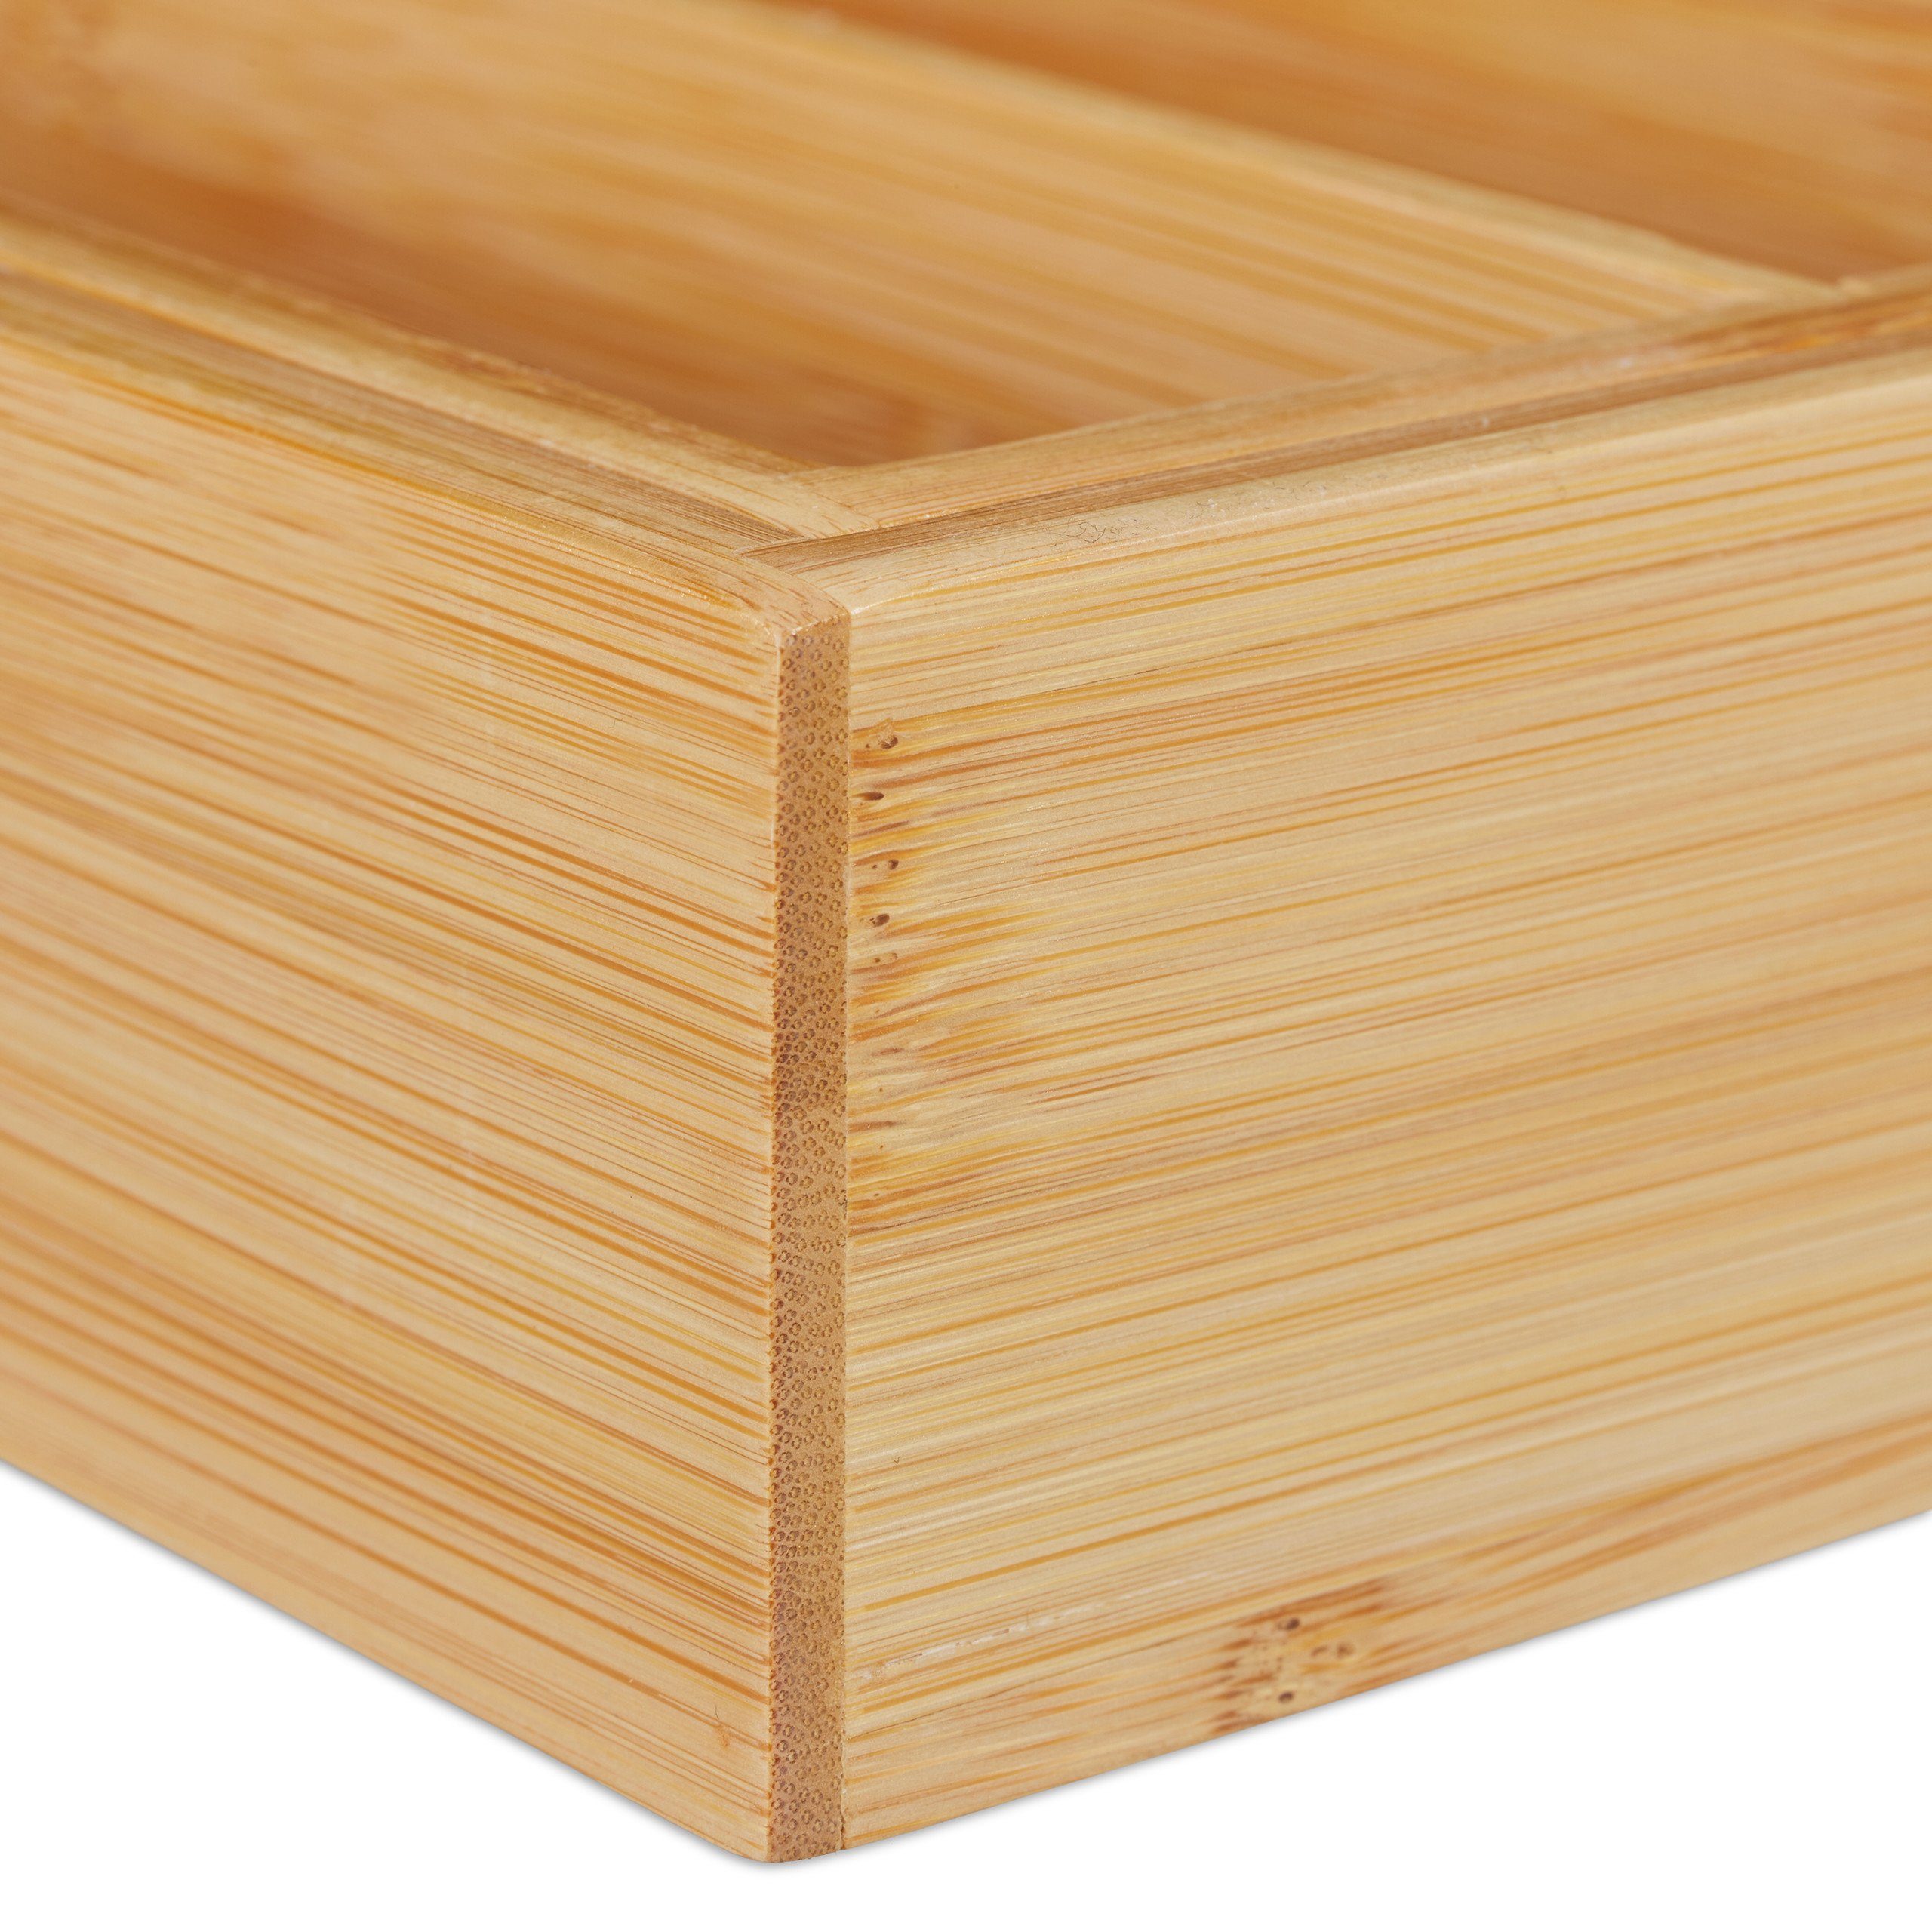 relaxdays Besteckkasten Besteckkasten Bambus ausziehbar